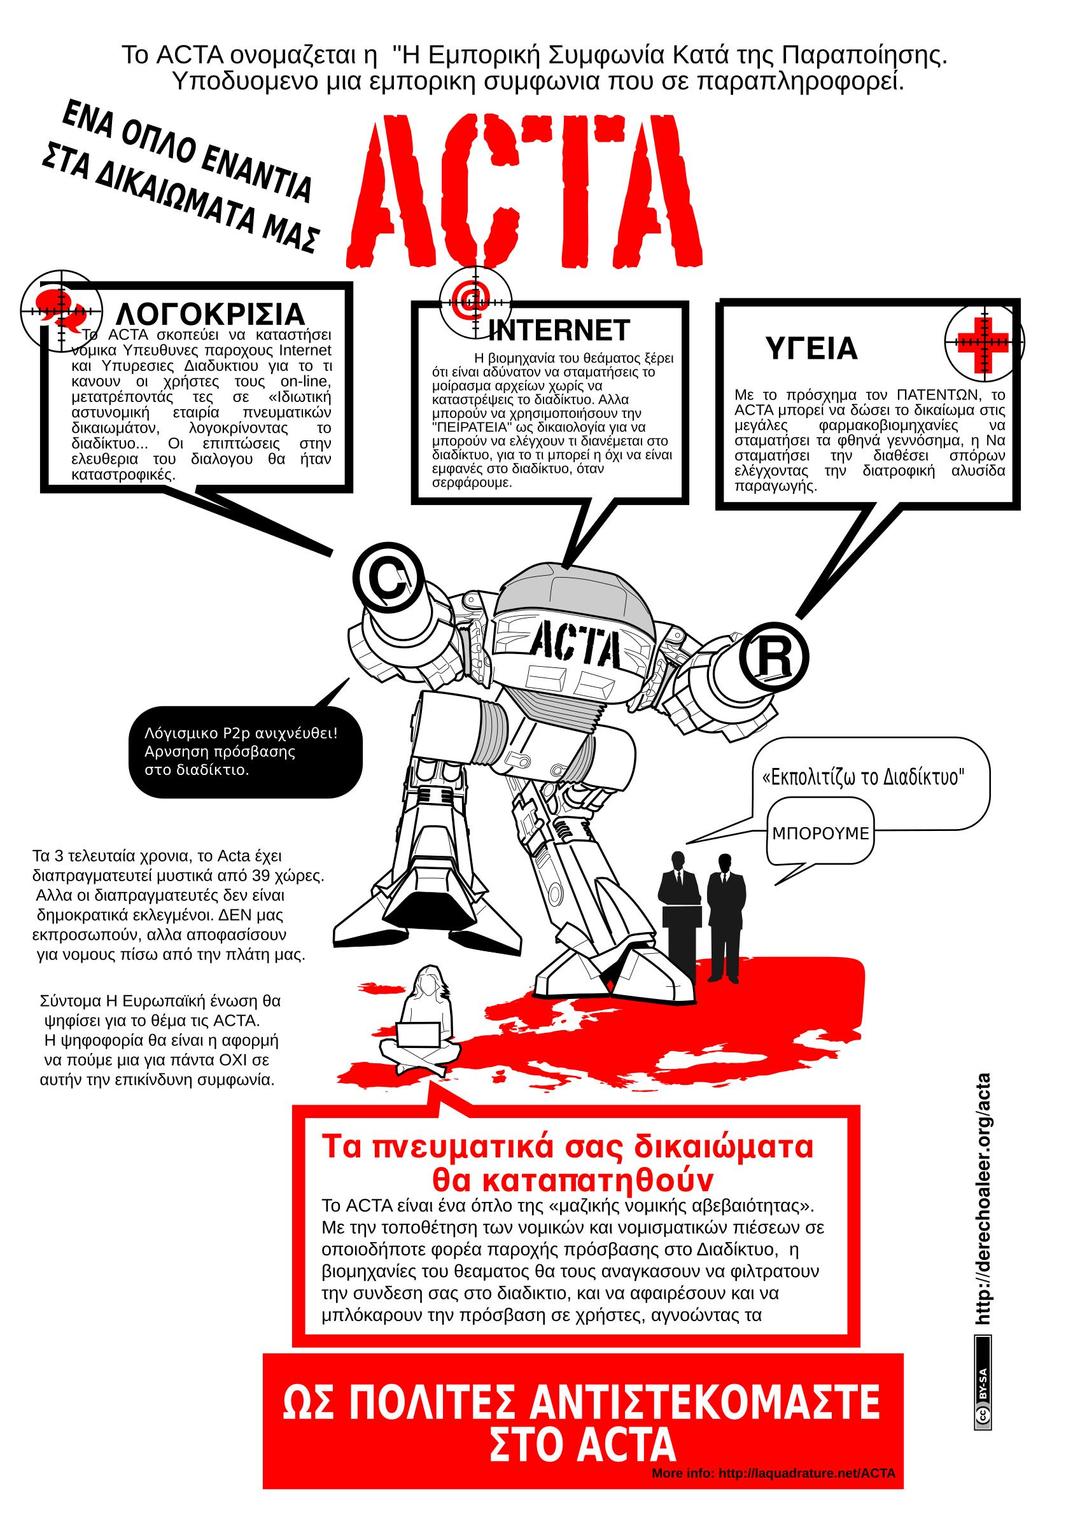 ACTA STOP GREEK png transparent